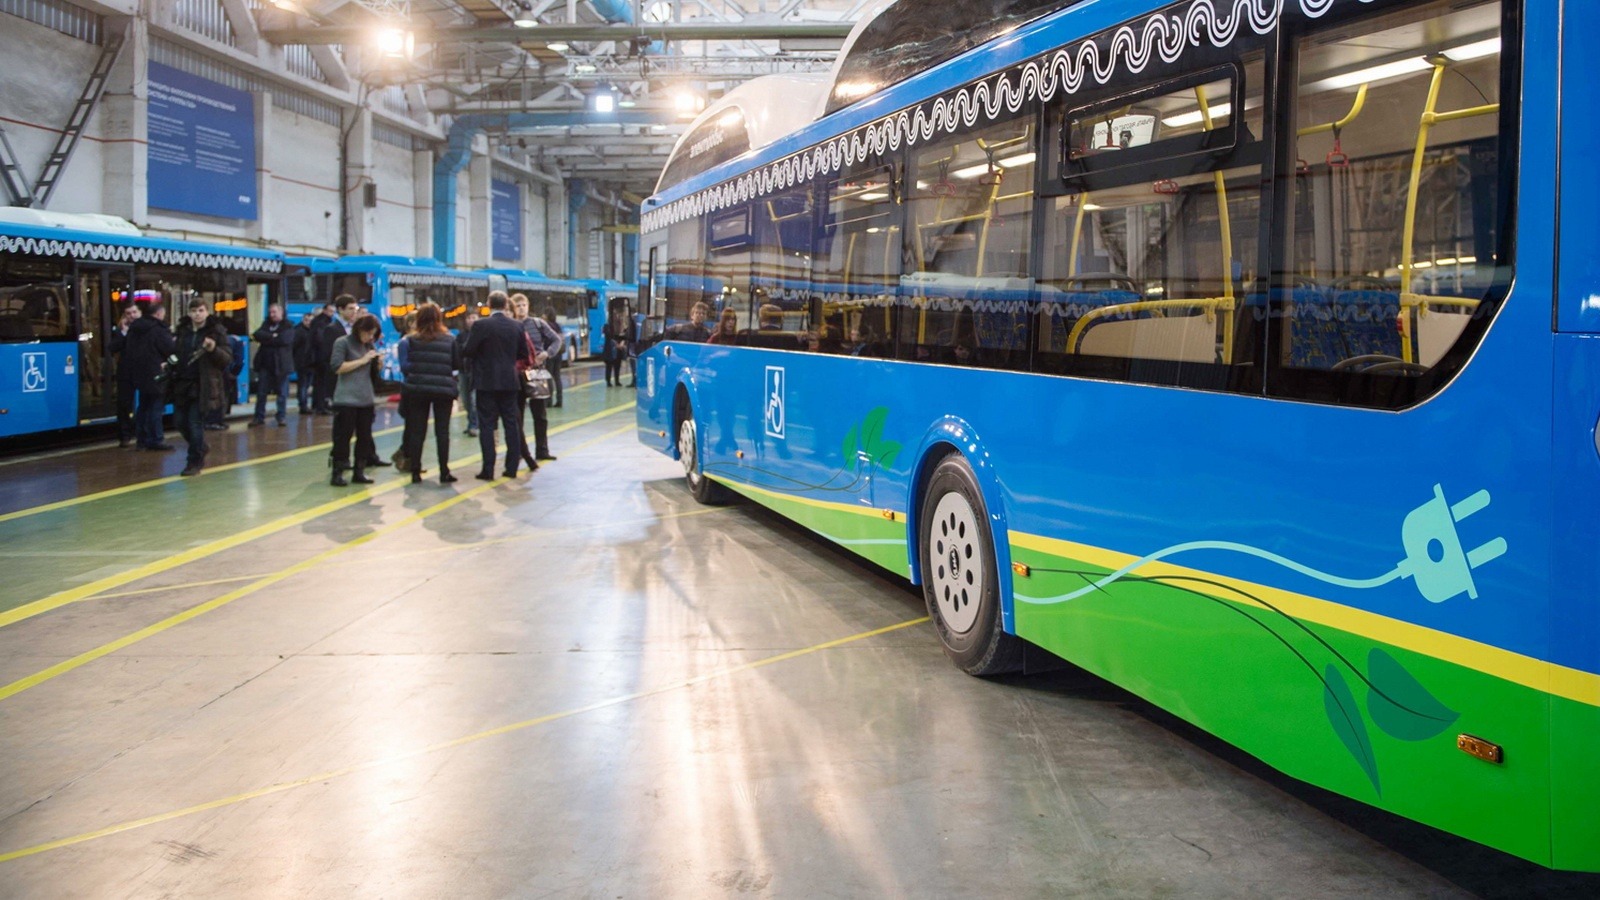 Каталог запчастей для автобусов от ЛиАЗ